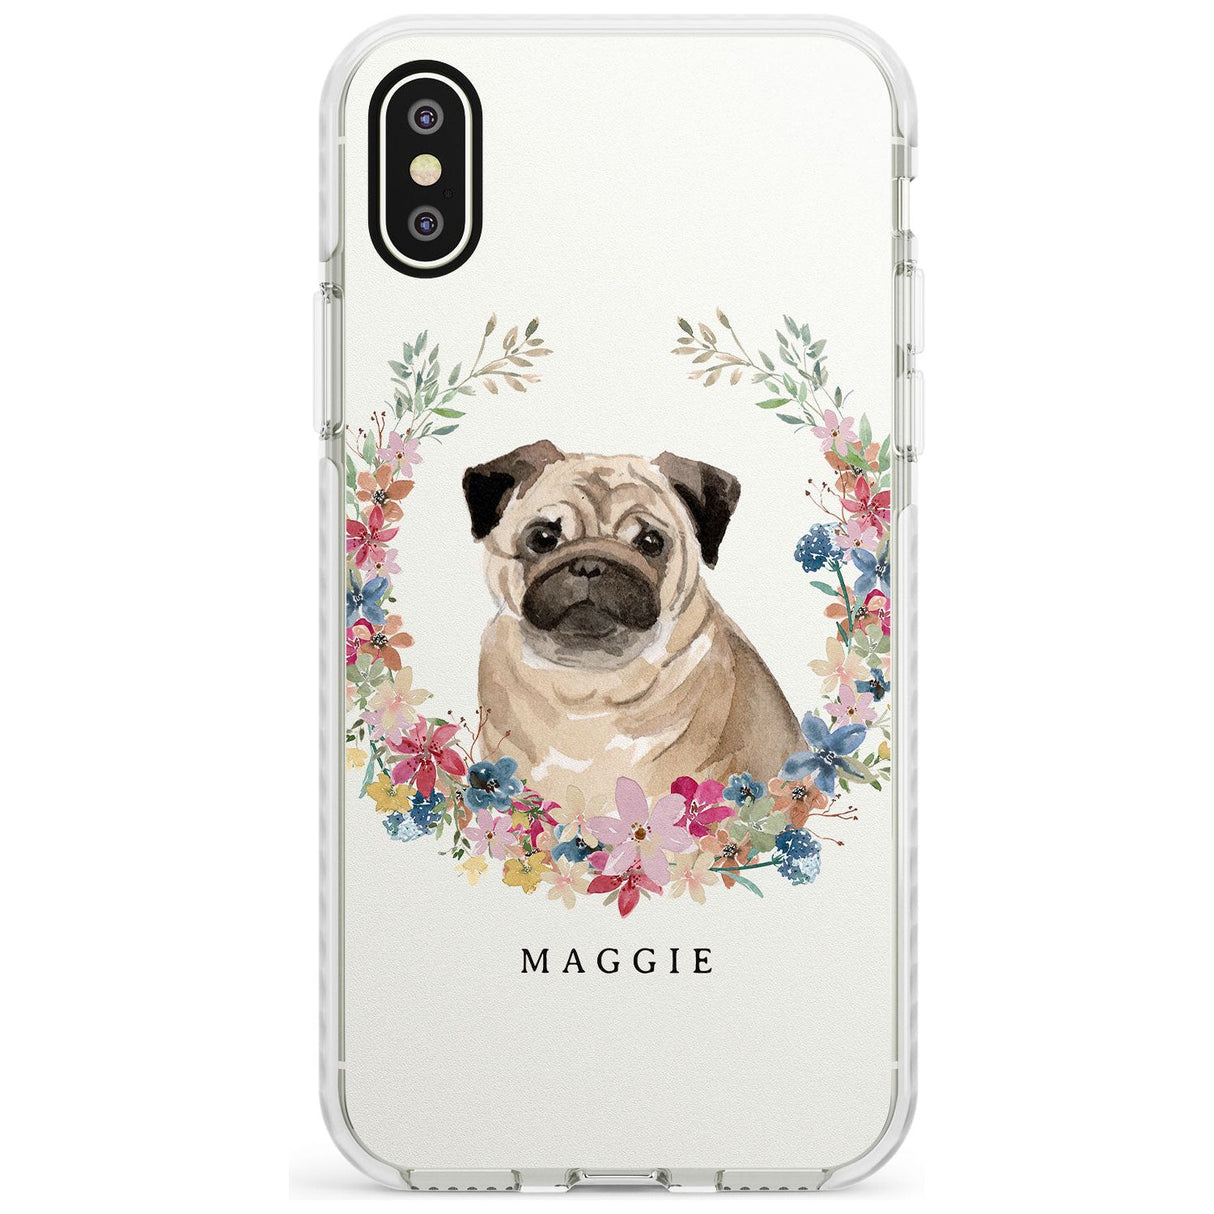 Pug - Watercolour Dog Portrait Impact Phone Case for iPhone X XS Max XR